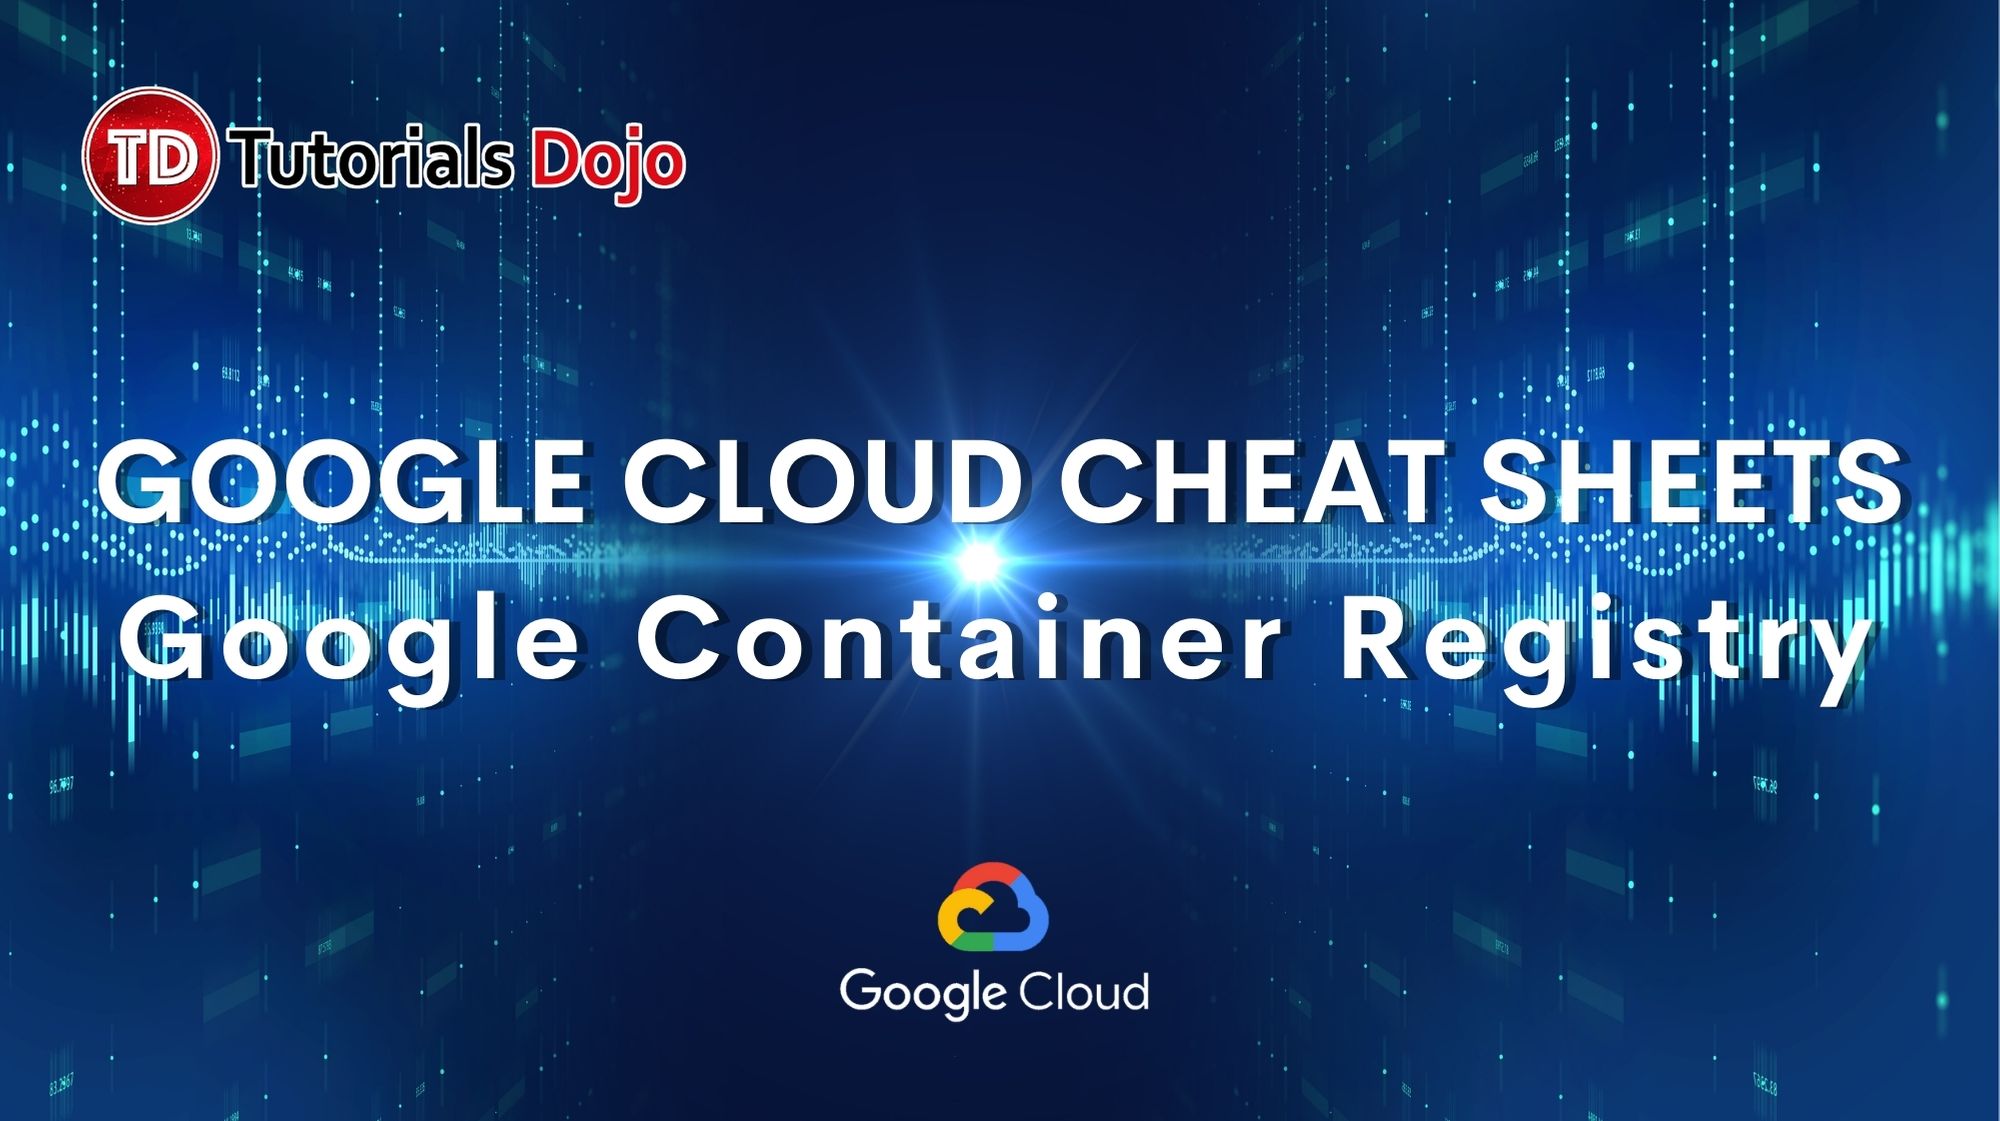 Google Container Registry